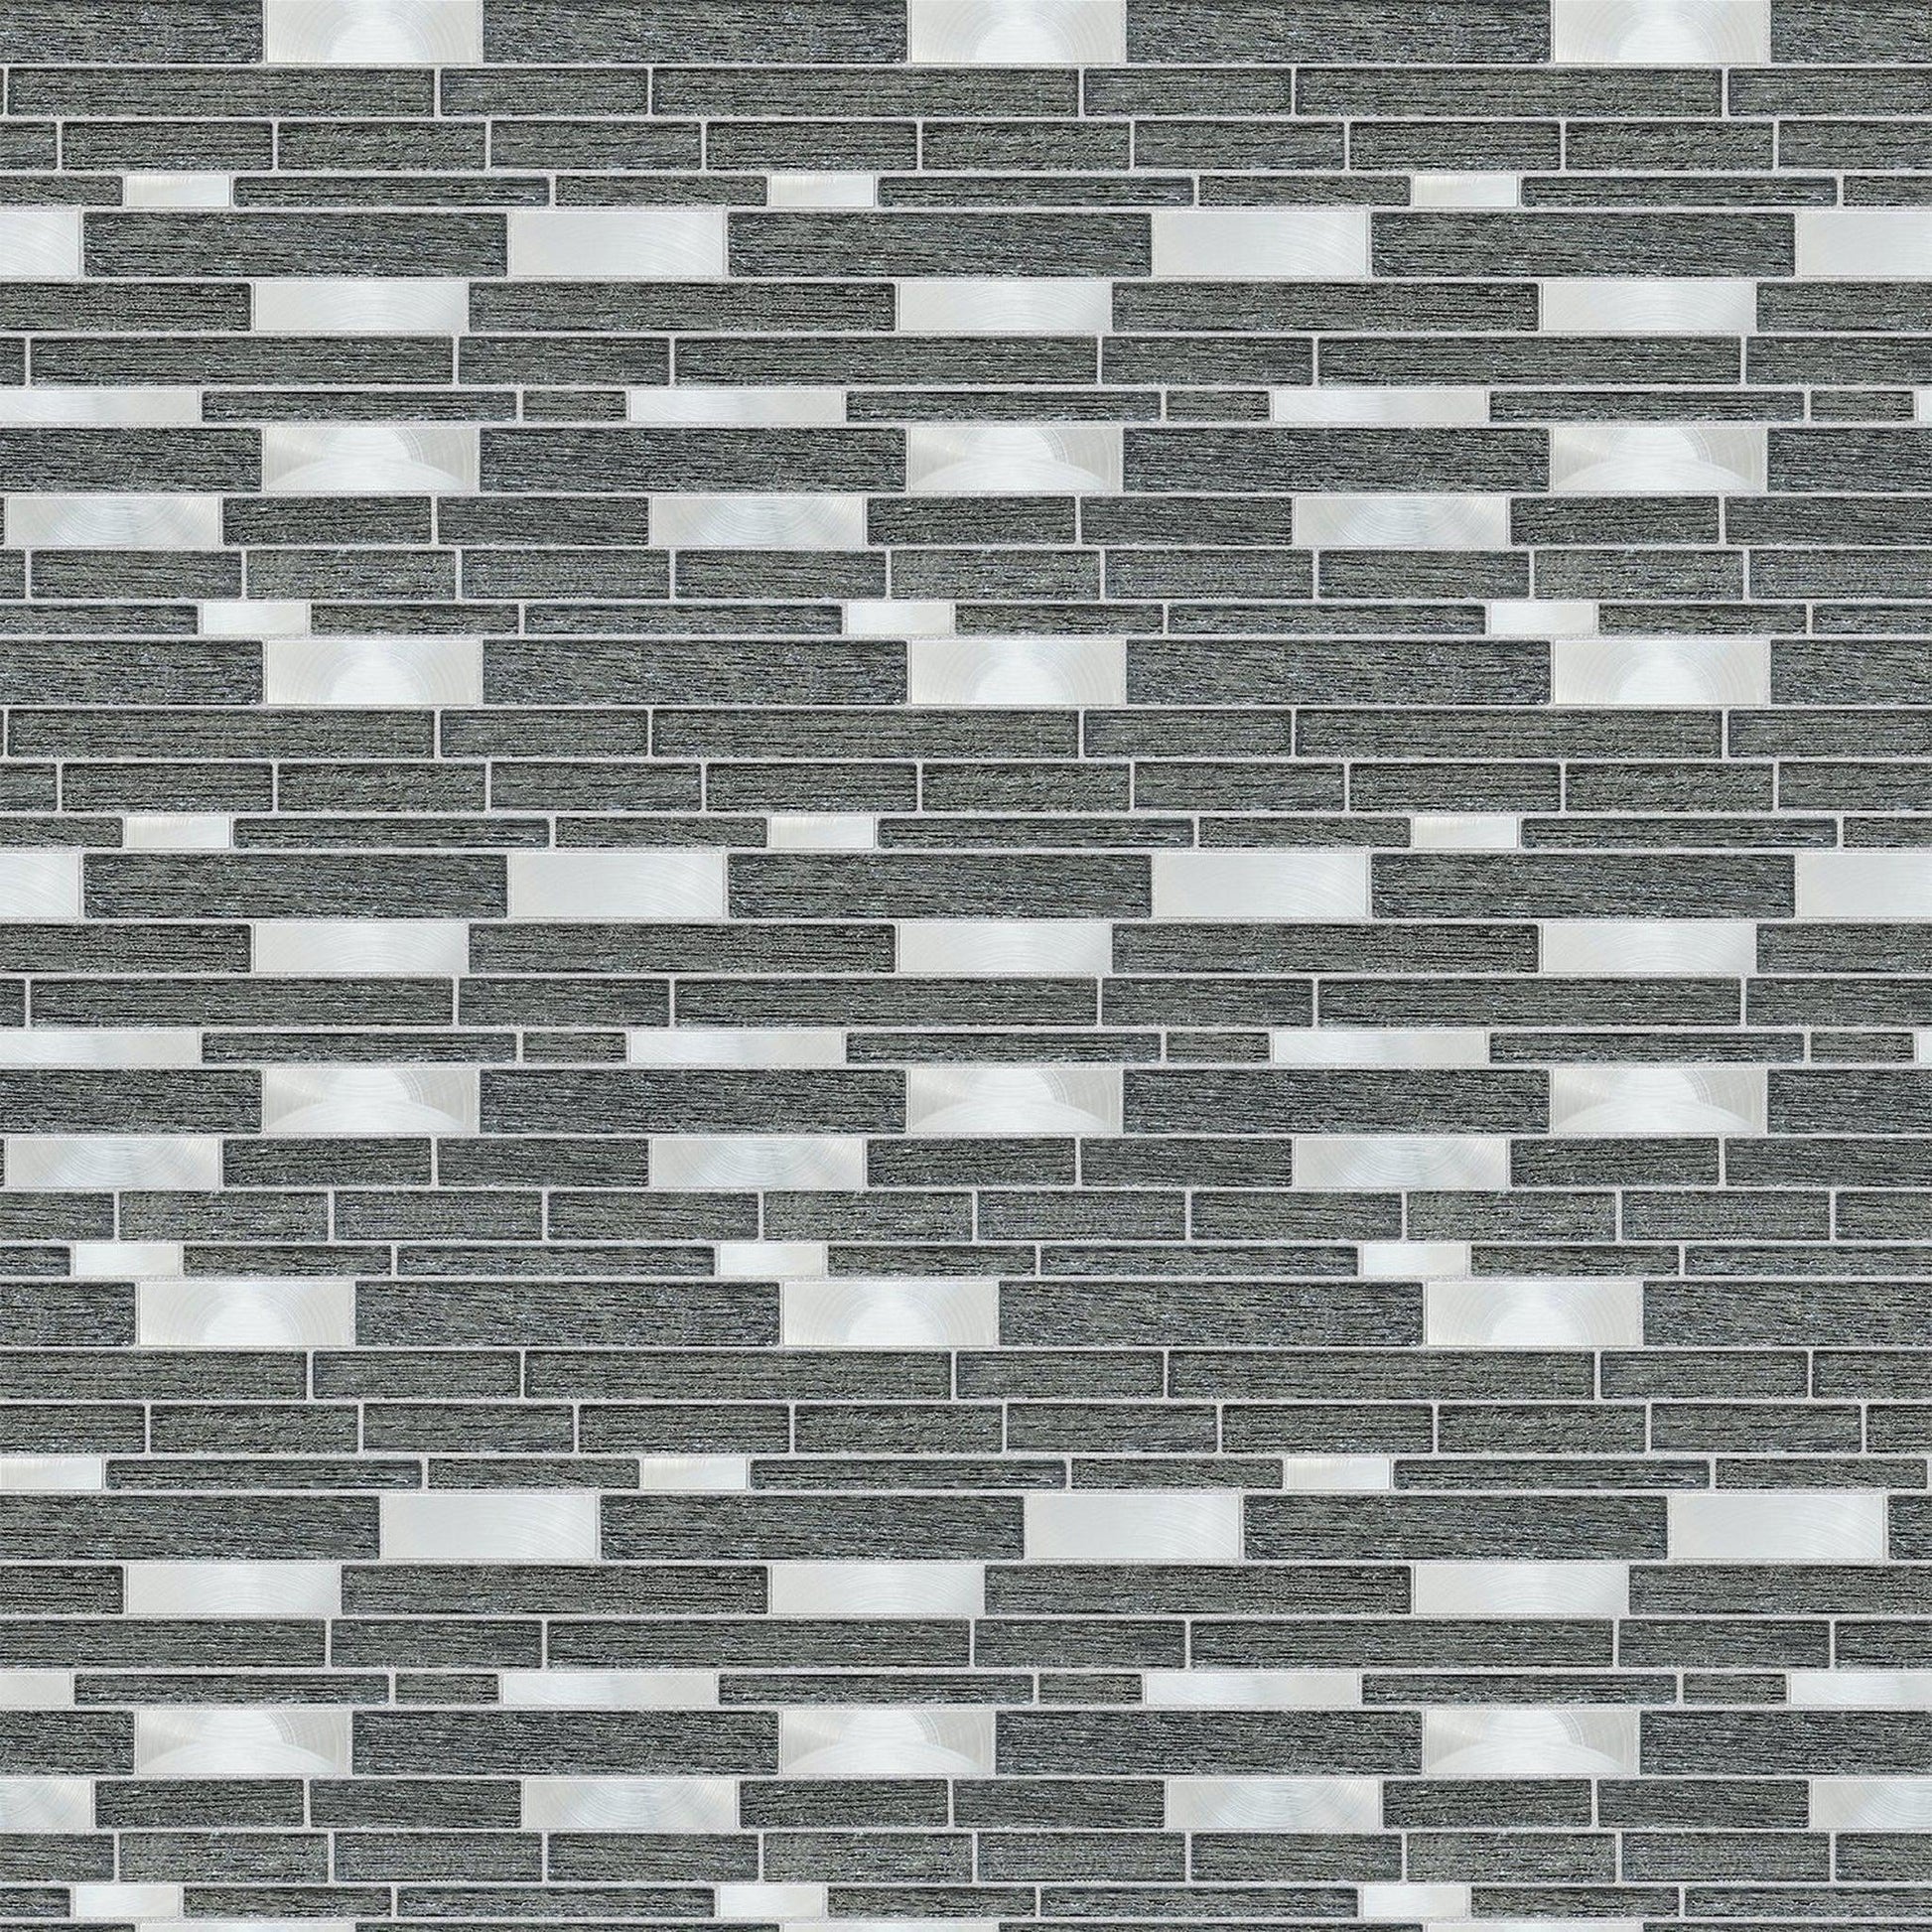 Altair Glena 15 pcs. Linear Black Glass Mosaic Wall Tile